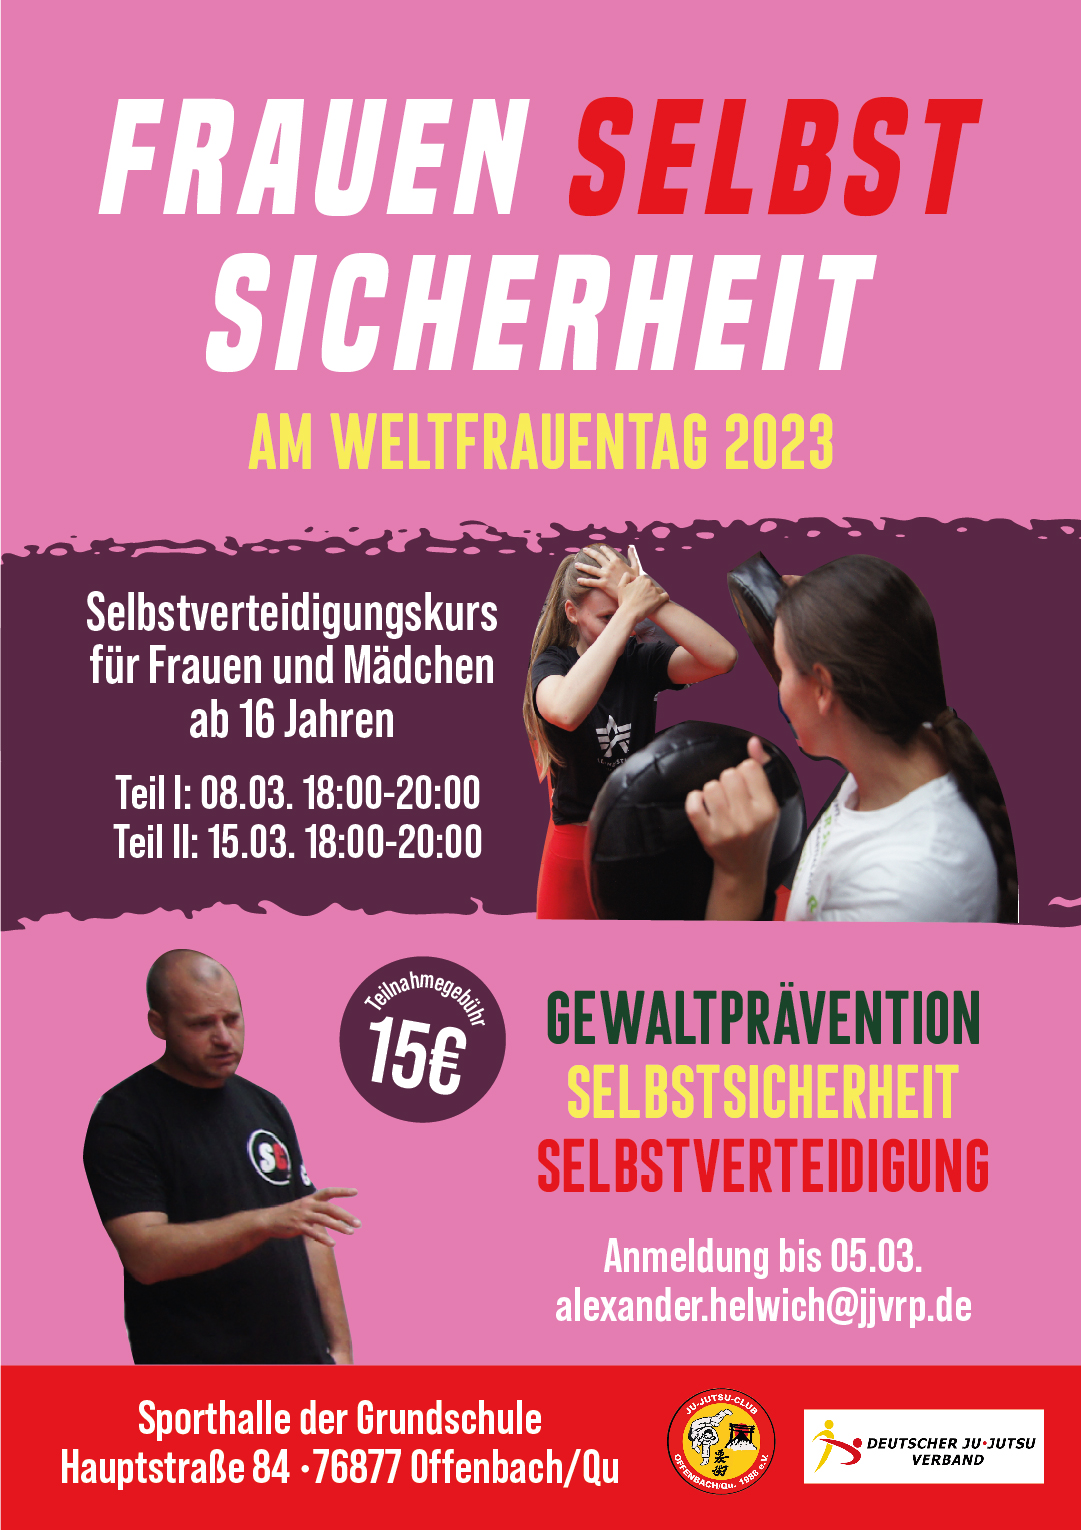 You are currently viewing Frauenselbstverteidigung am 08.03.2023